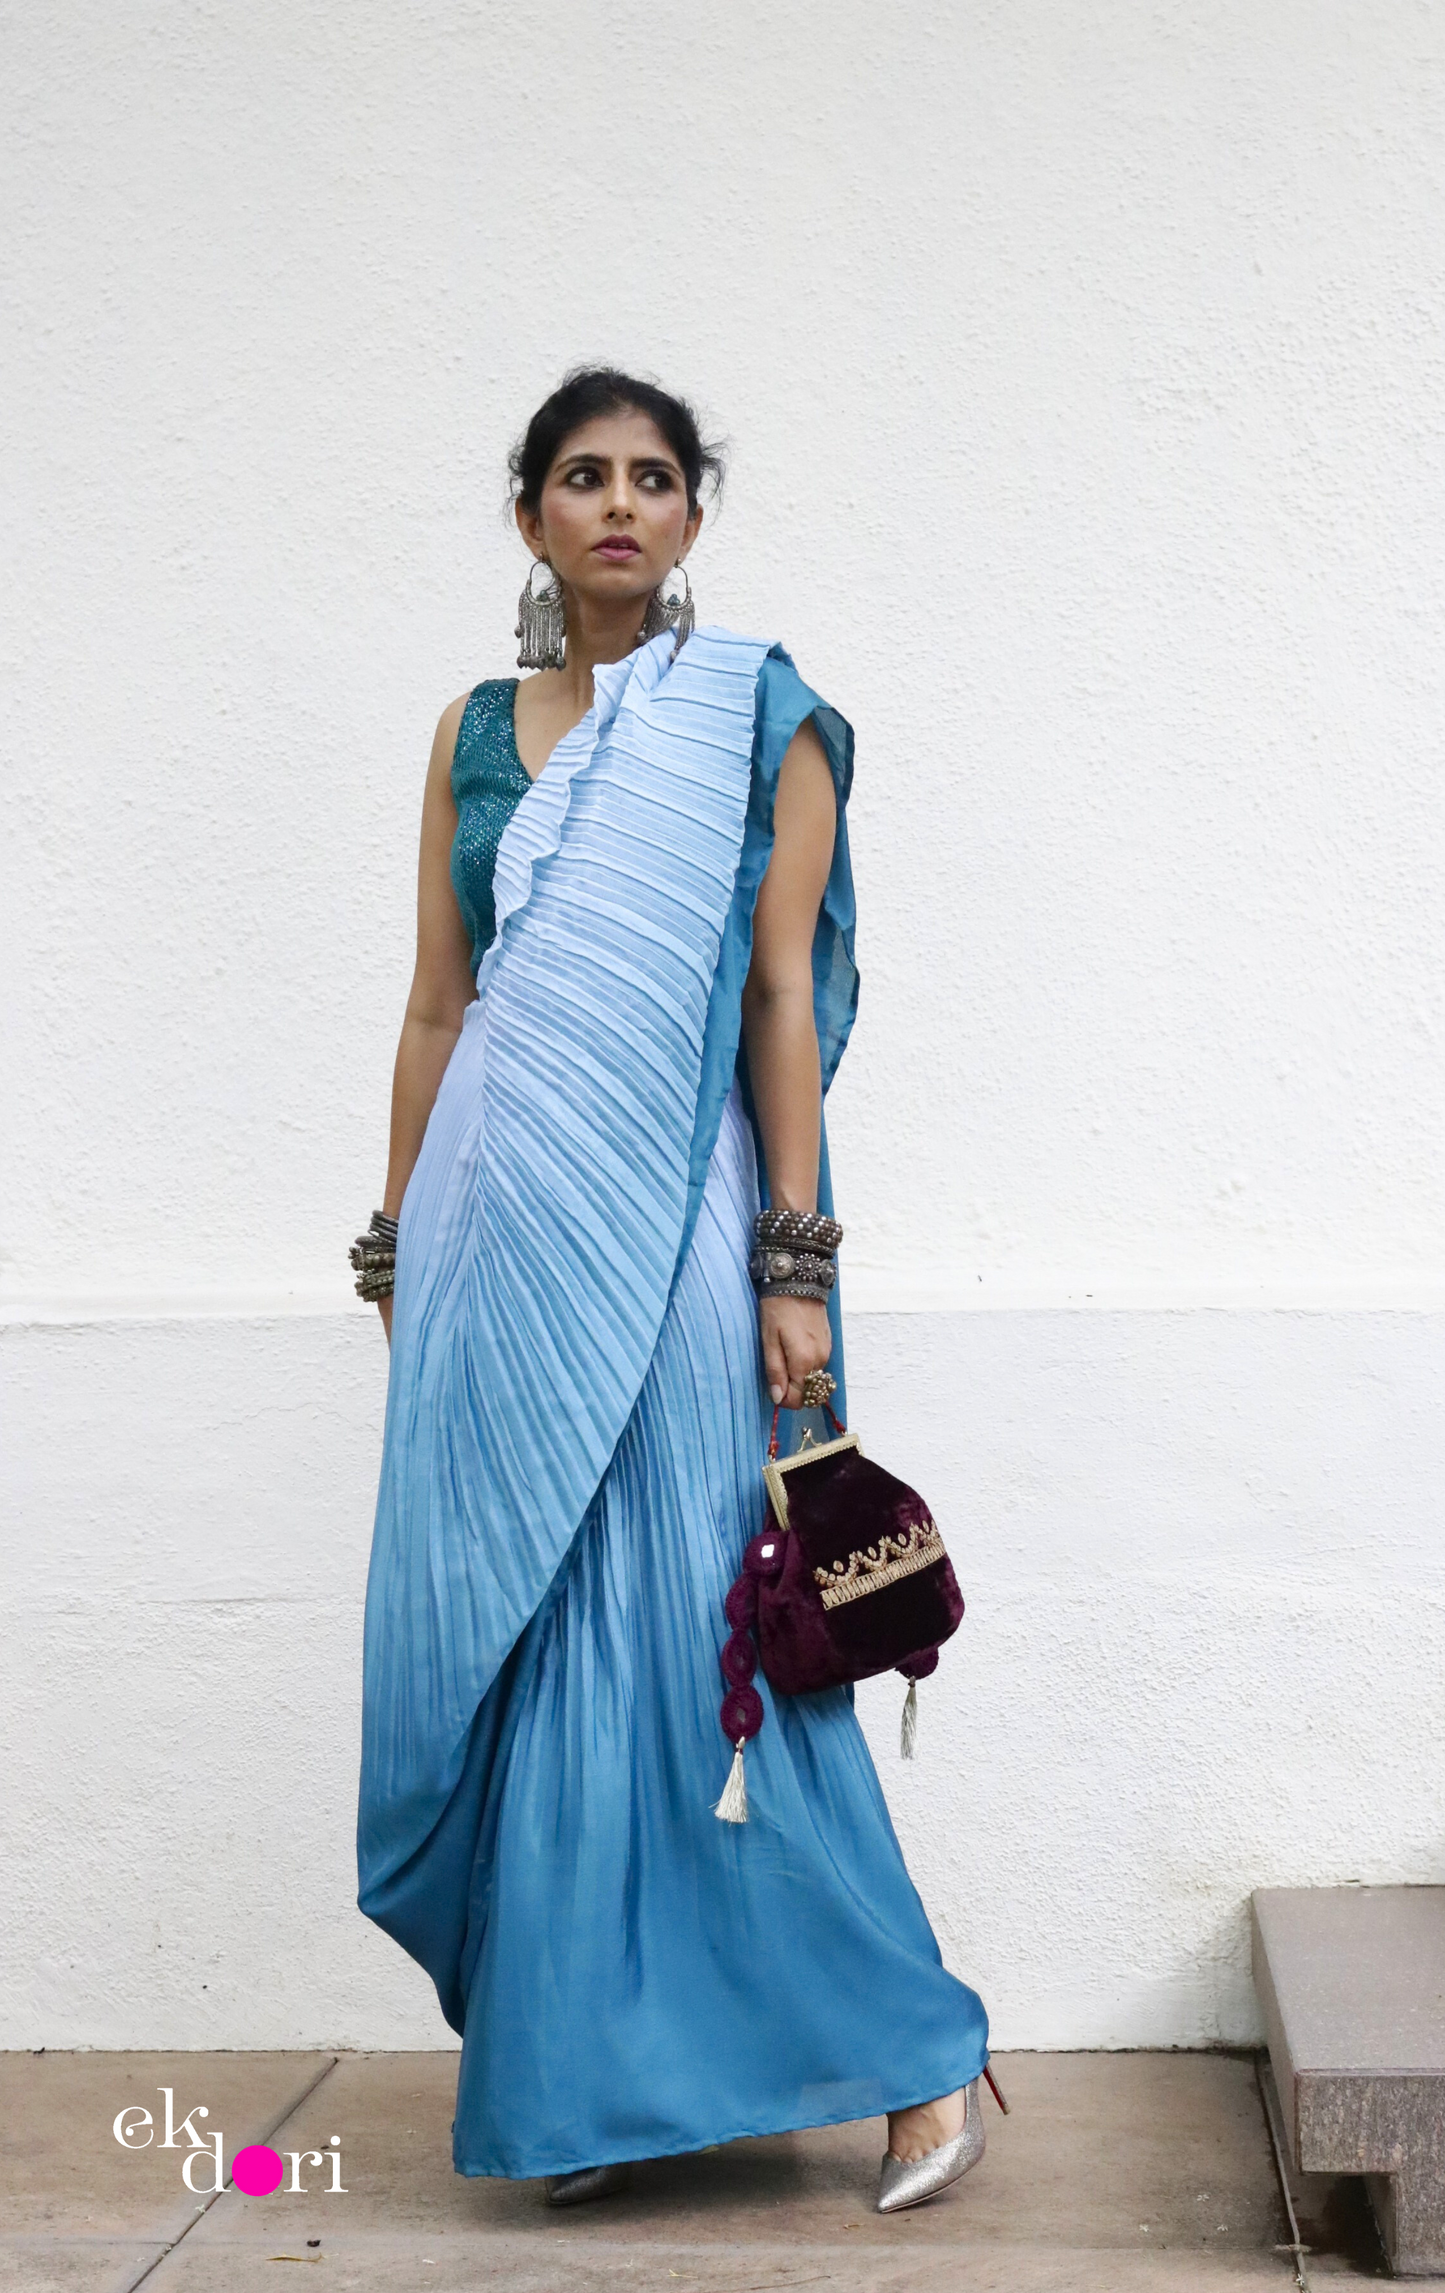 'Teal Treasures' Ready To Wear Draped Saree Skirt : Fun Modern Micropleated Quick Draped Saree